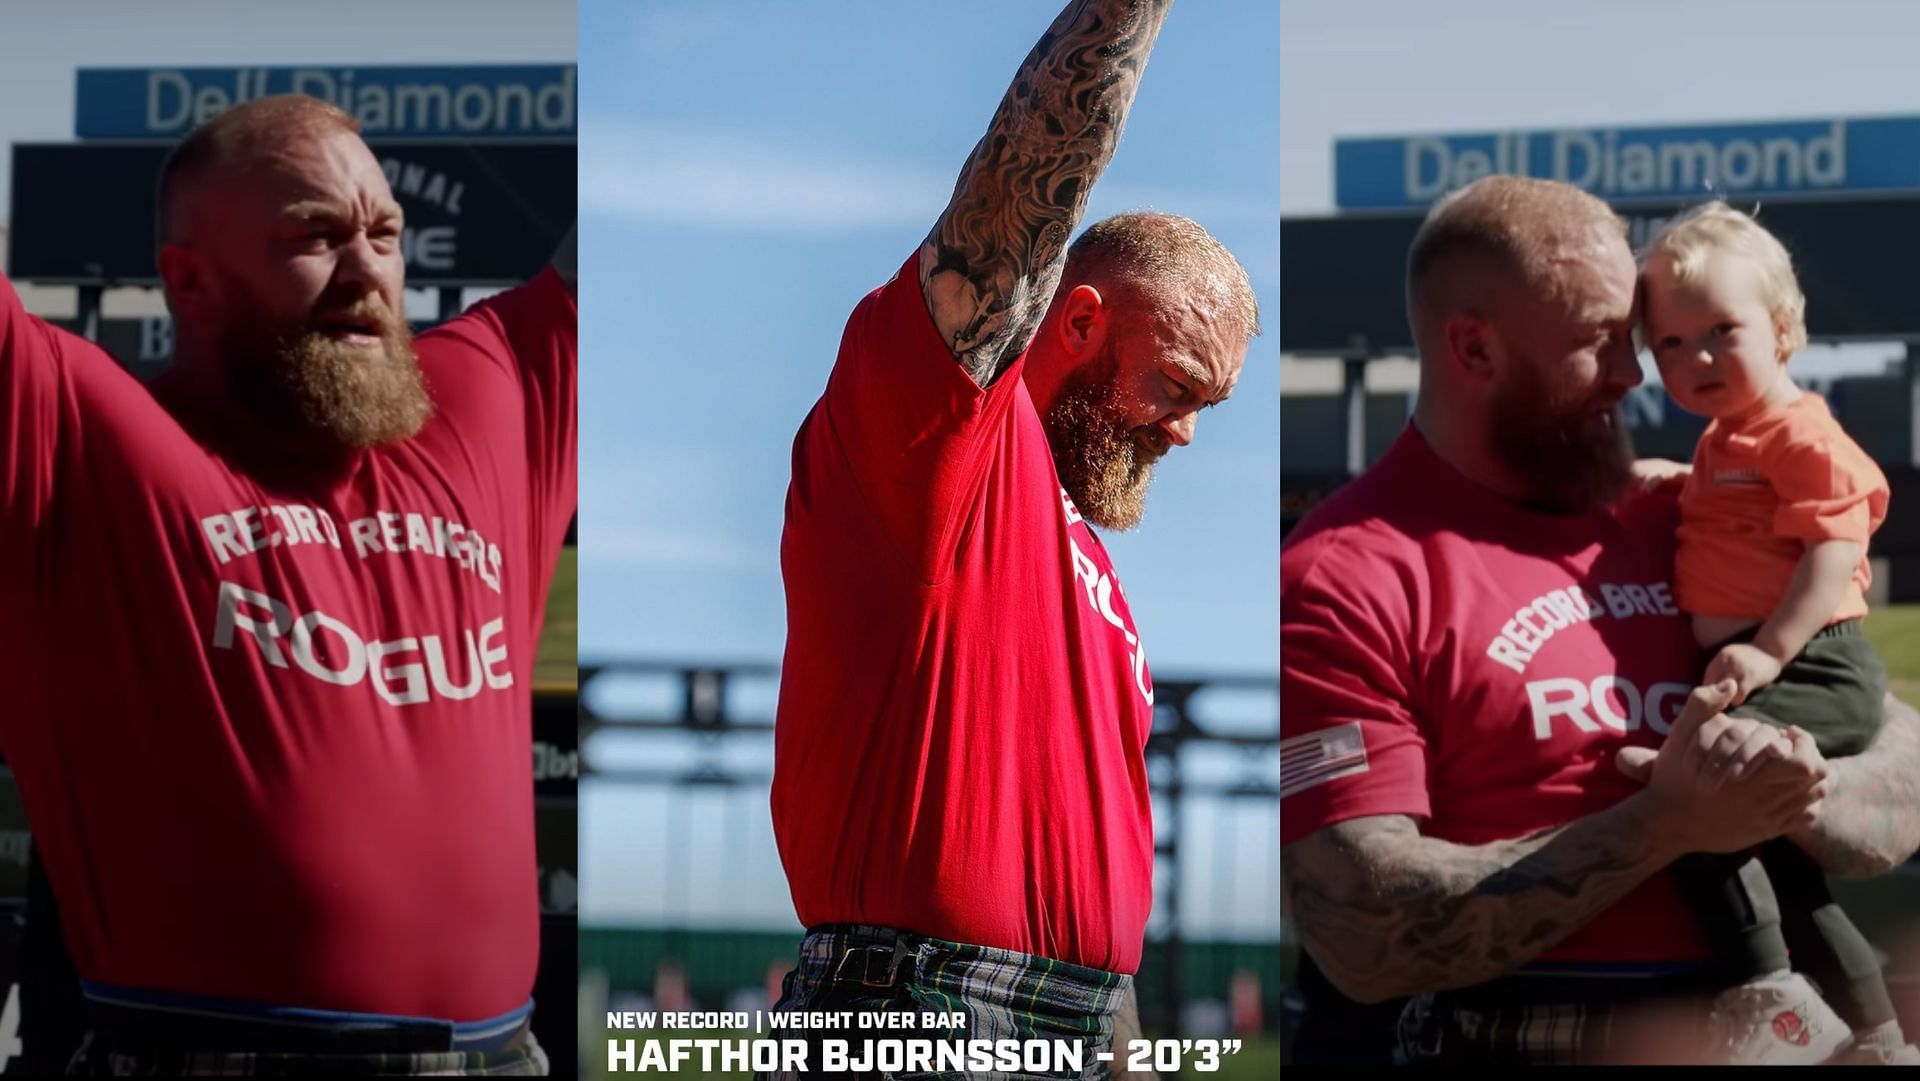 Hafthor Julius Bjornsson Sets New World Record (Image via Instagram @rogueinvitational)